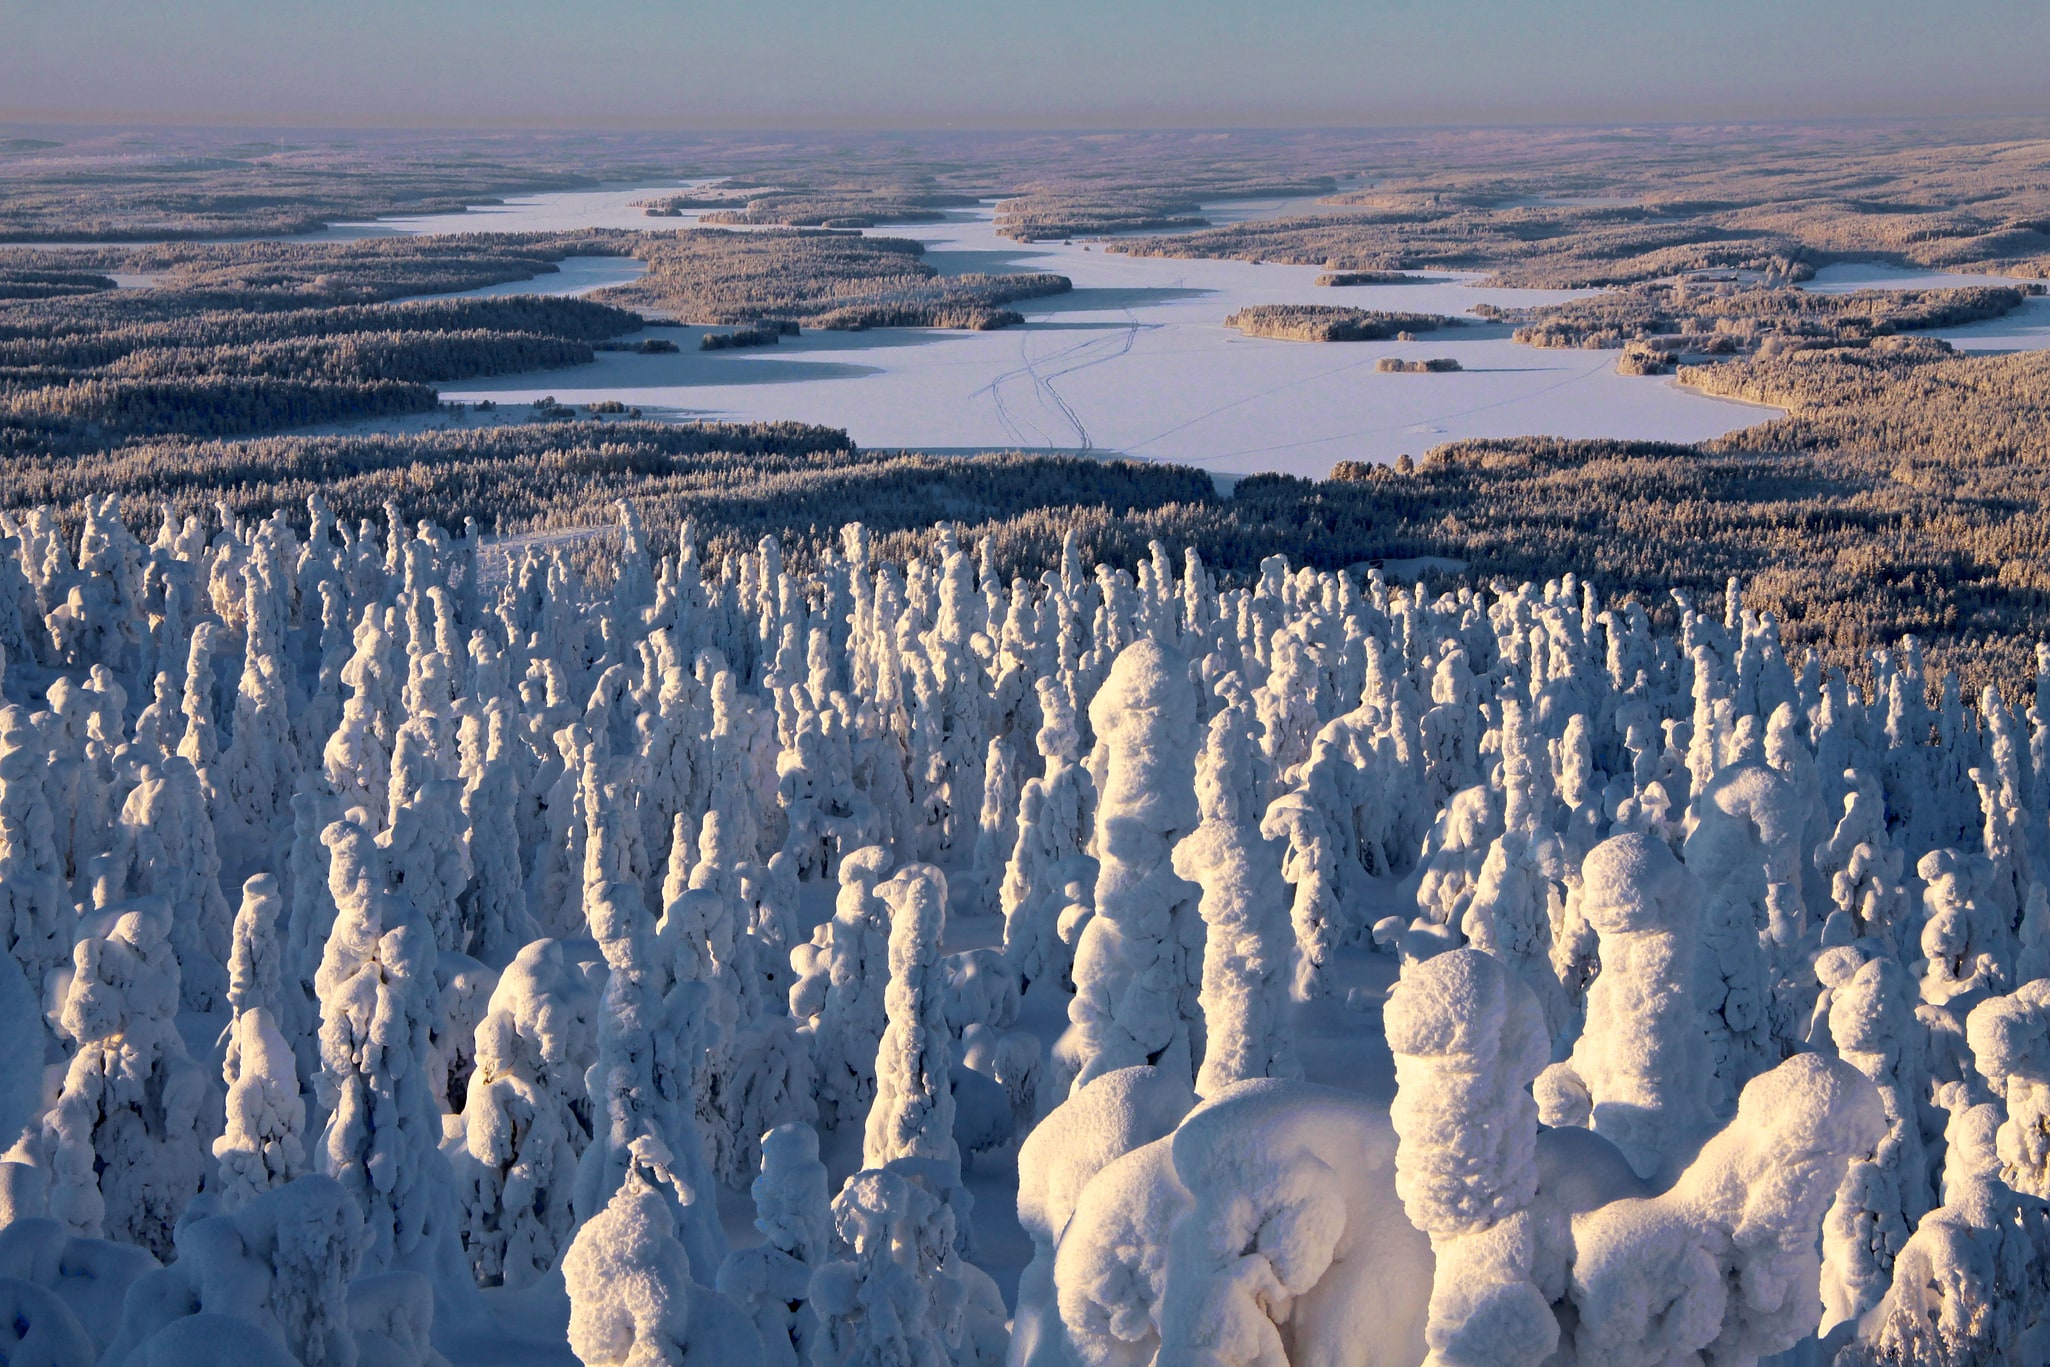 Kaldoaivi Wilderness Area, Finland